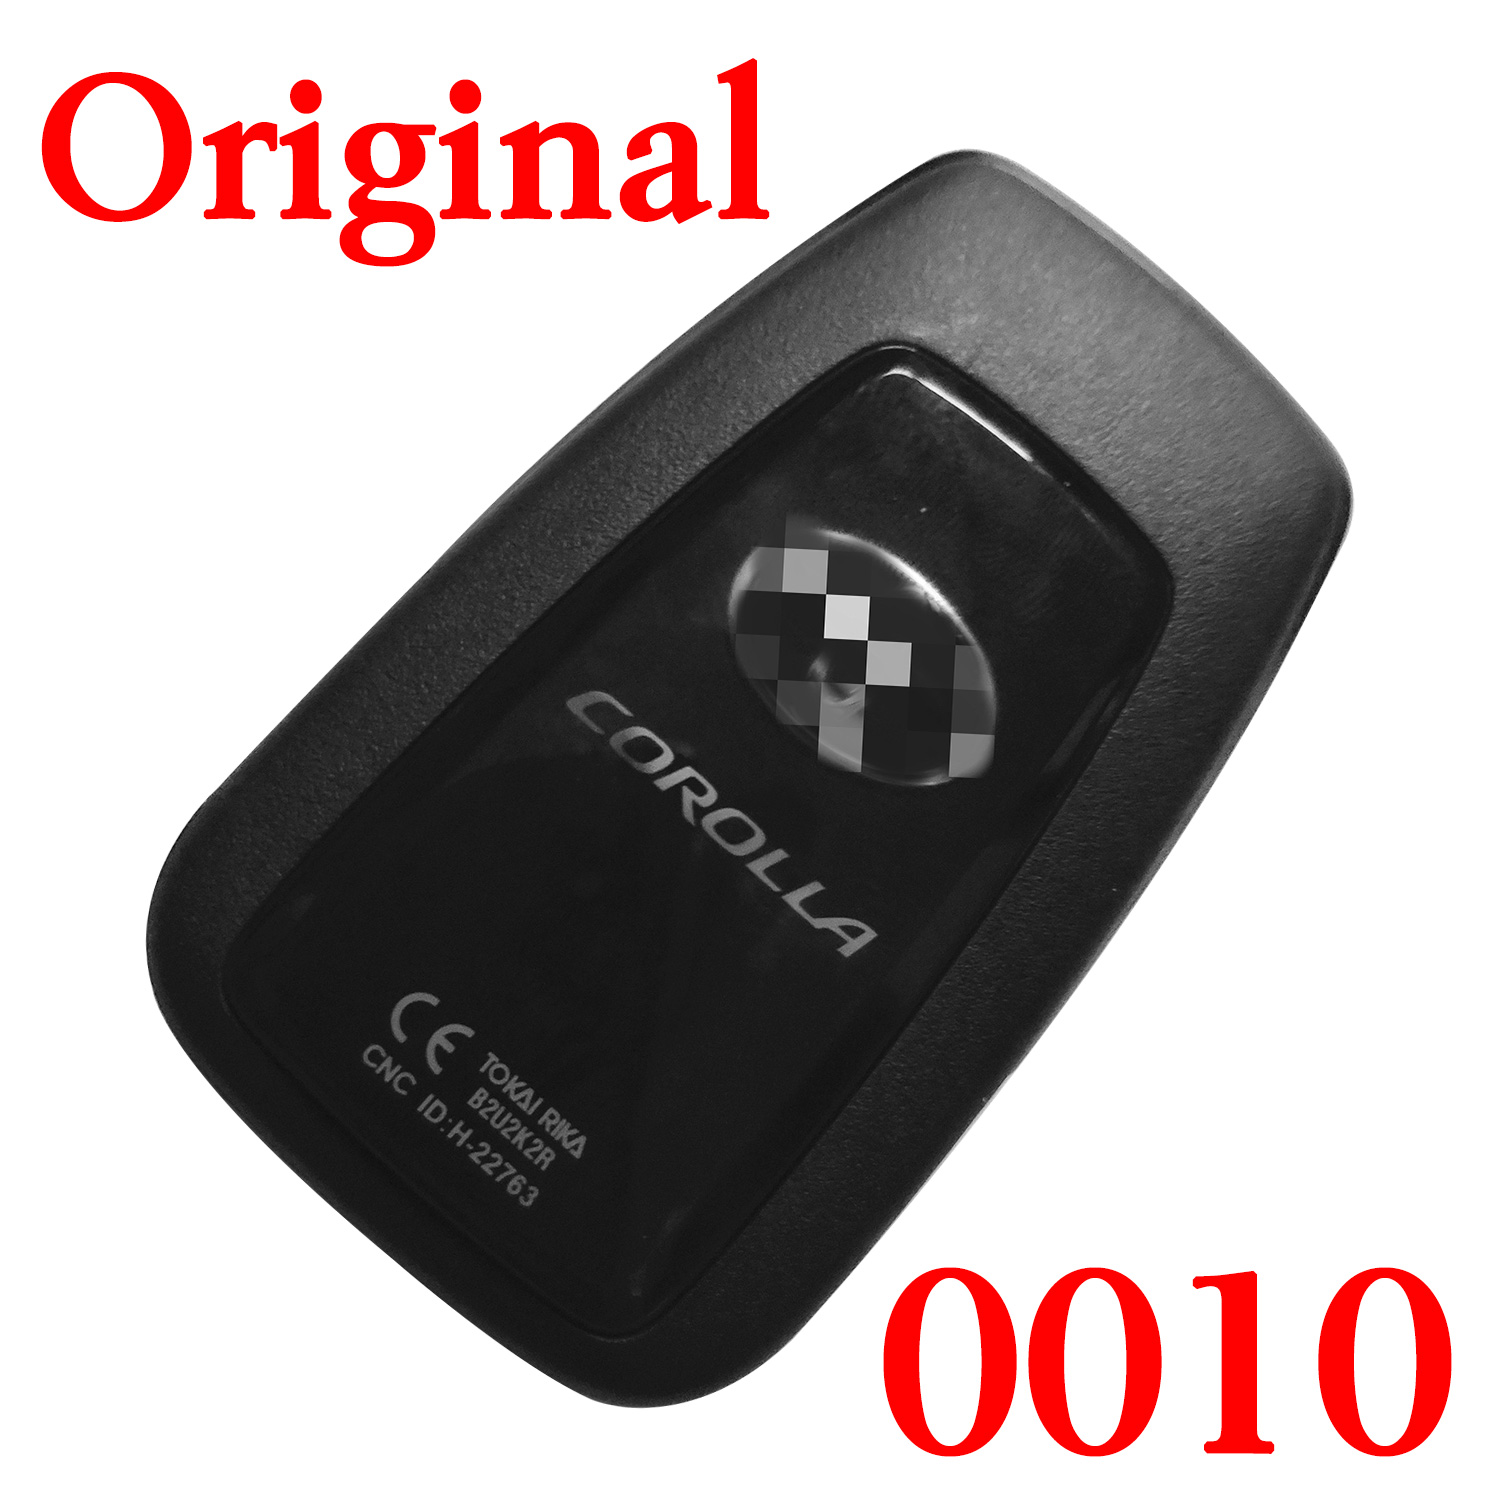 Original 3 Buttons 434 MHz Smart Key for Toyota Corolla  - TOKAI RIKA B2U2K2R - 61E466-0010